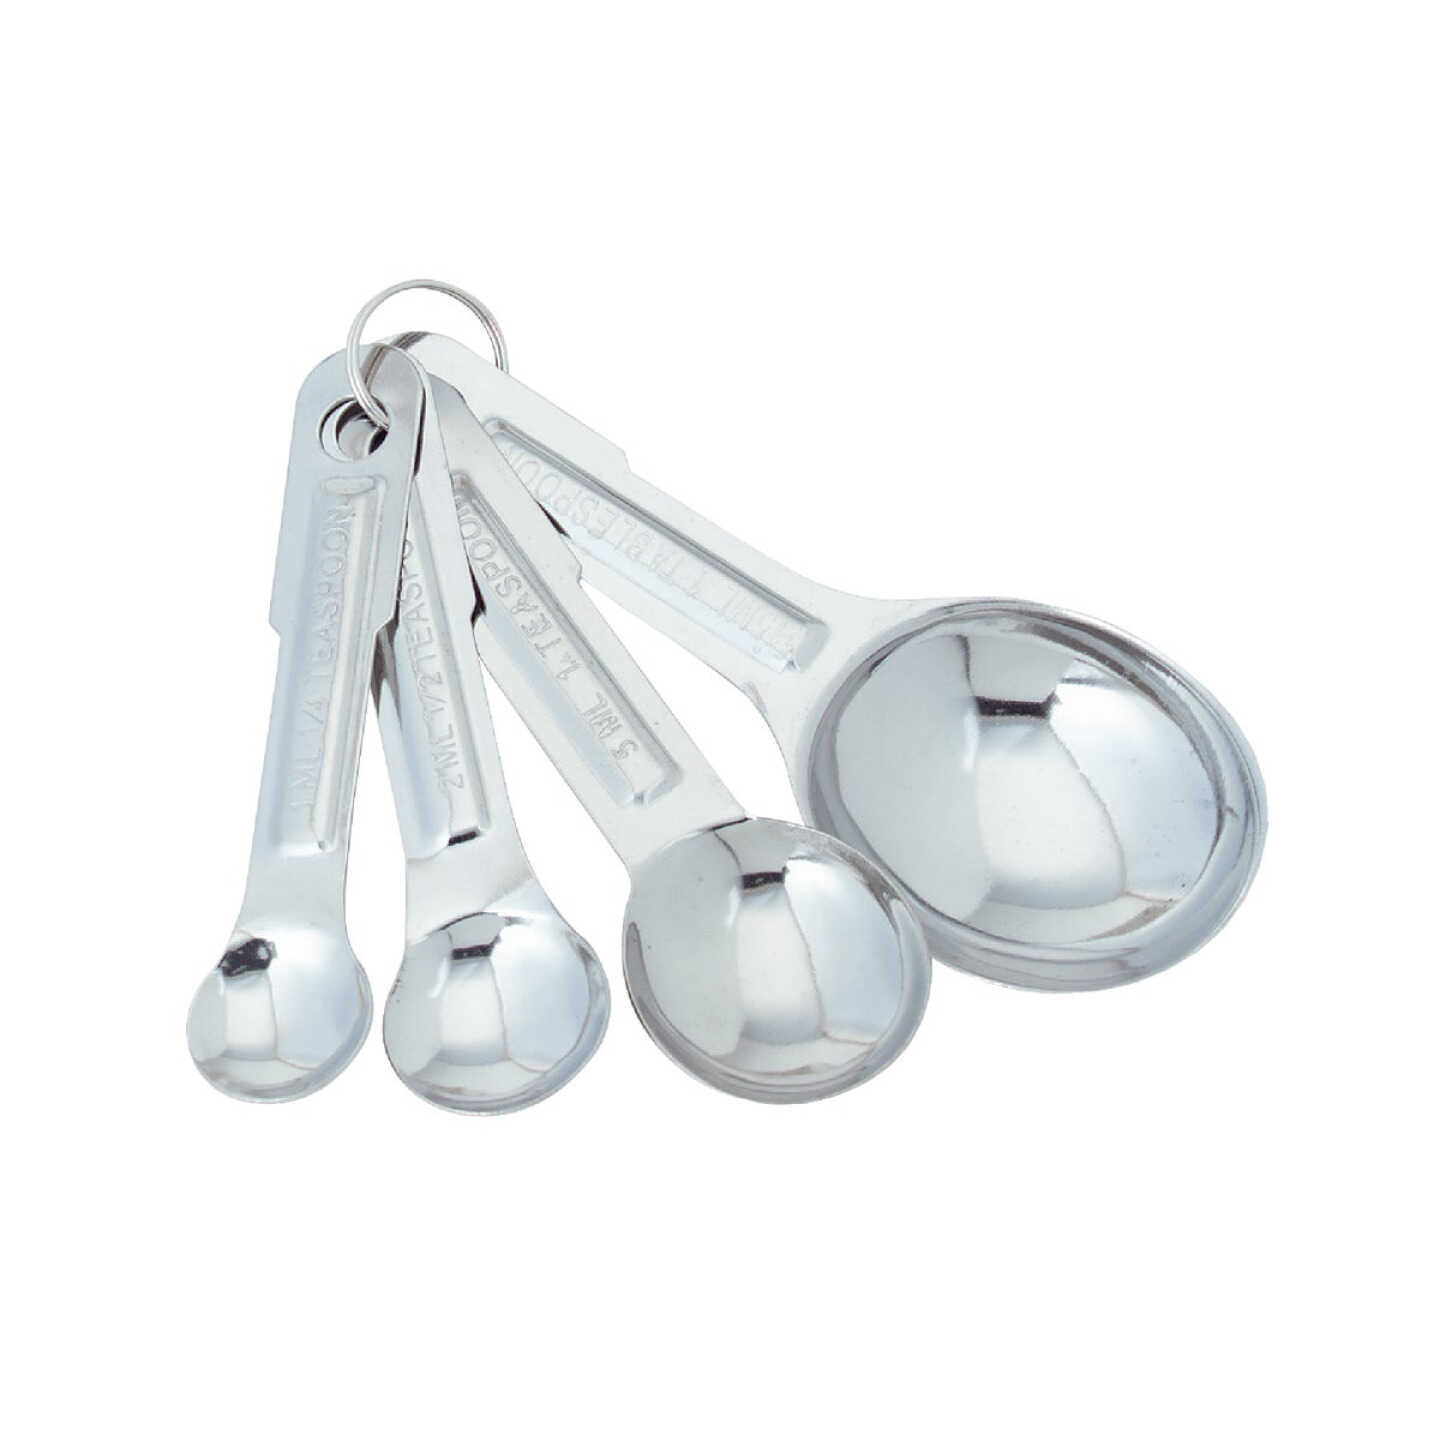 Norpro Stainless Steel Measuring Spoons (4-Piece) - Baller Hardware